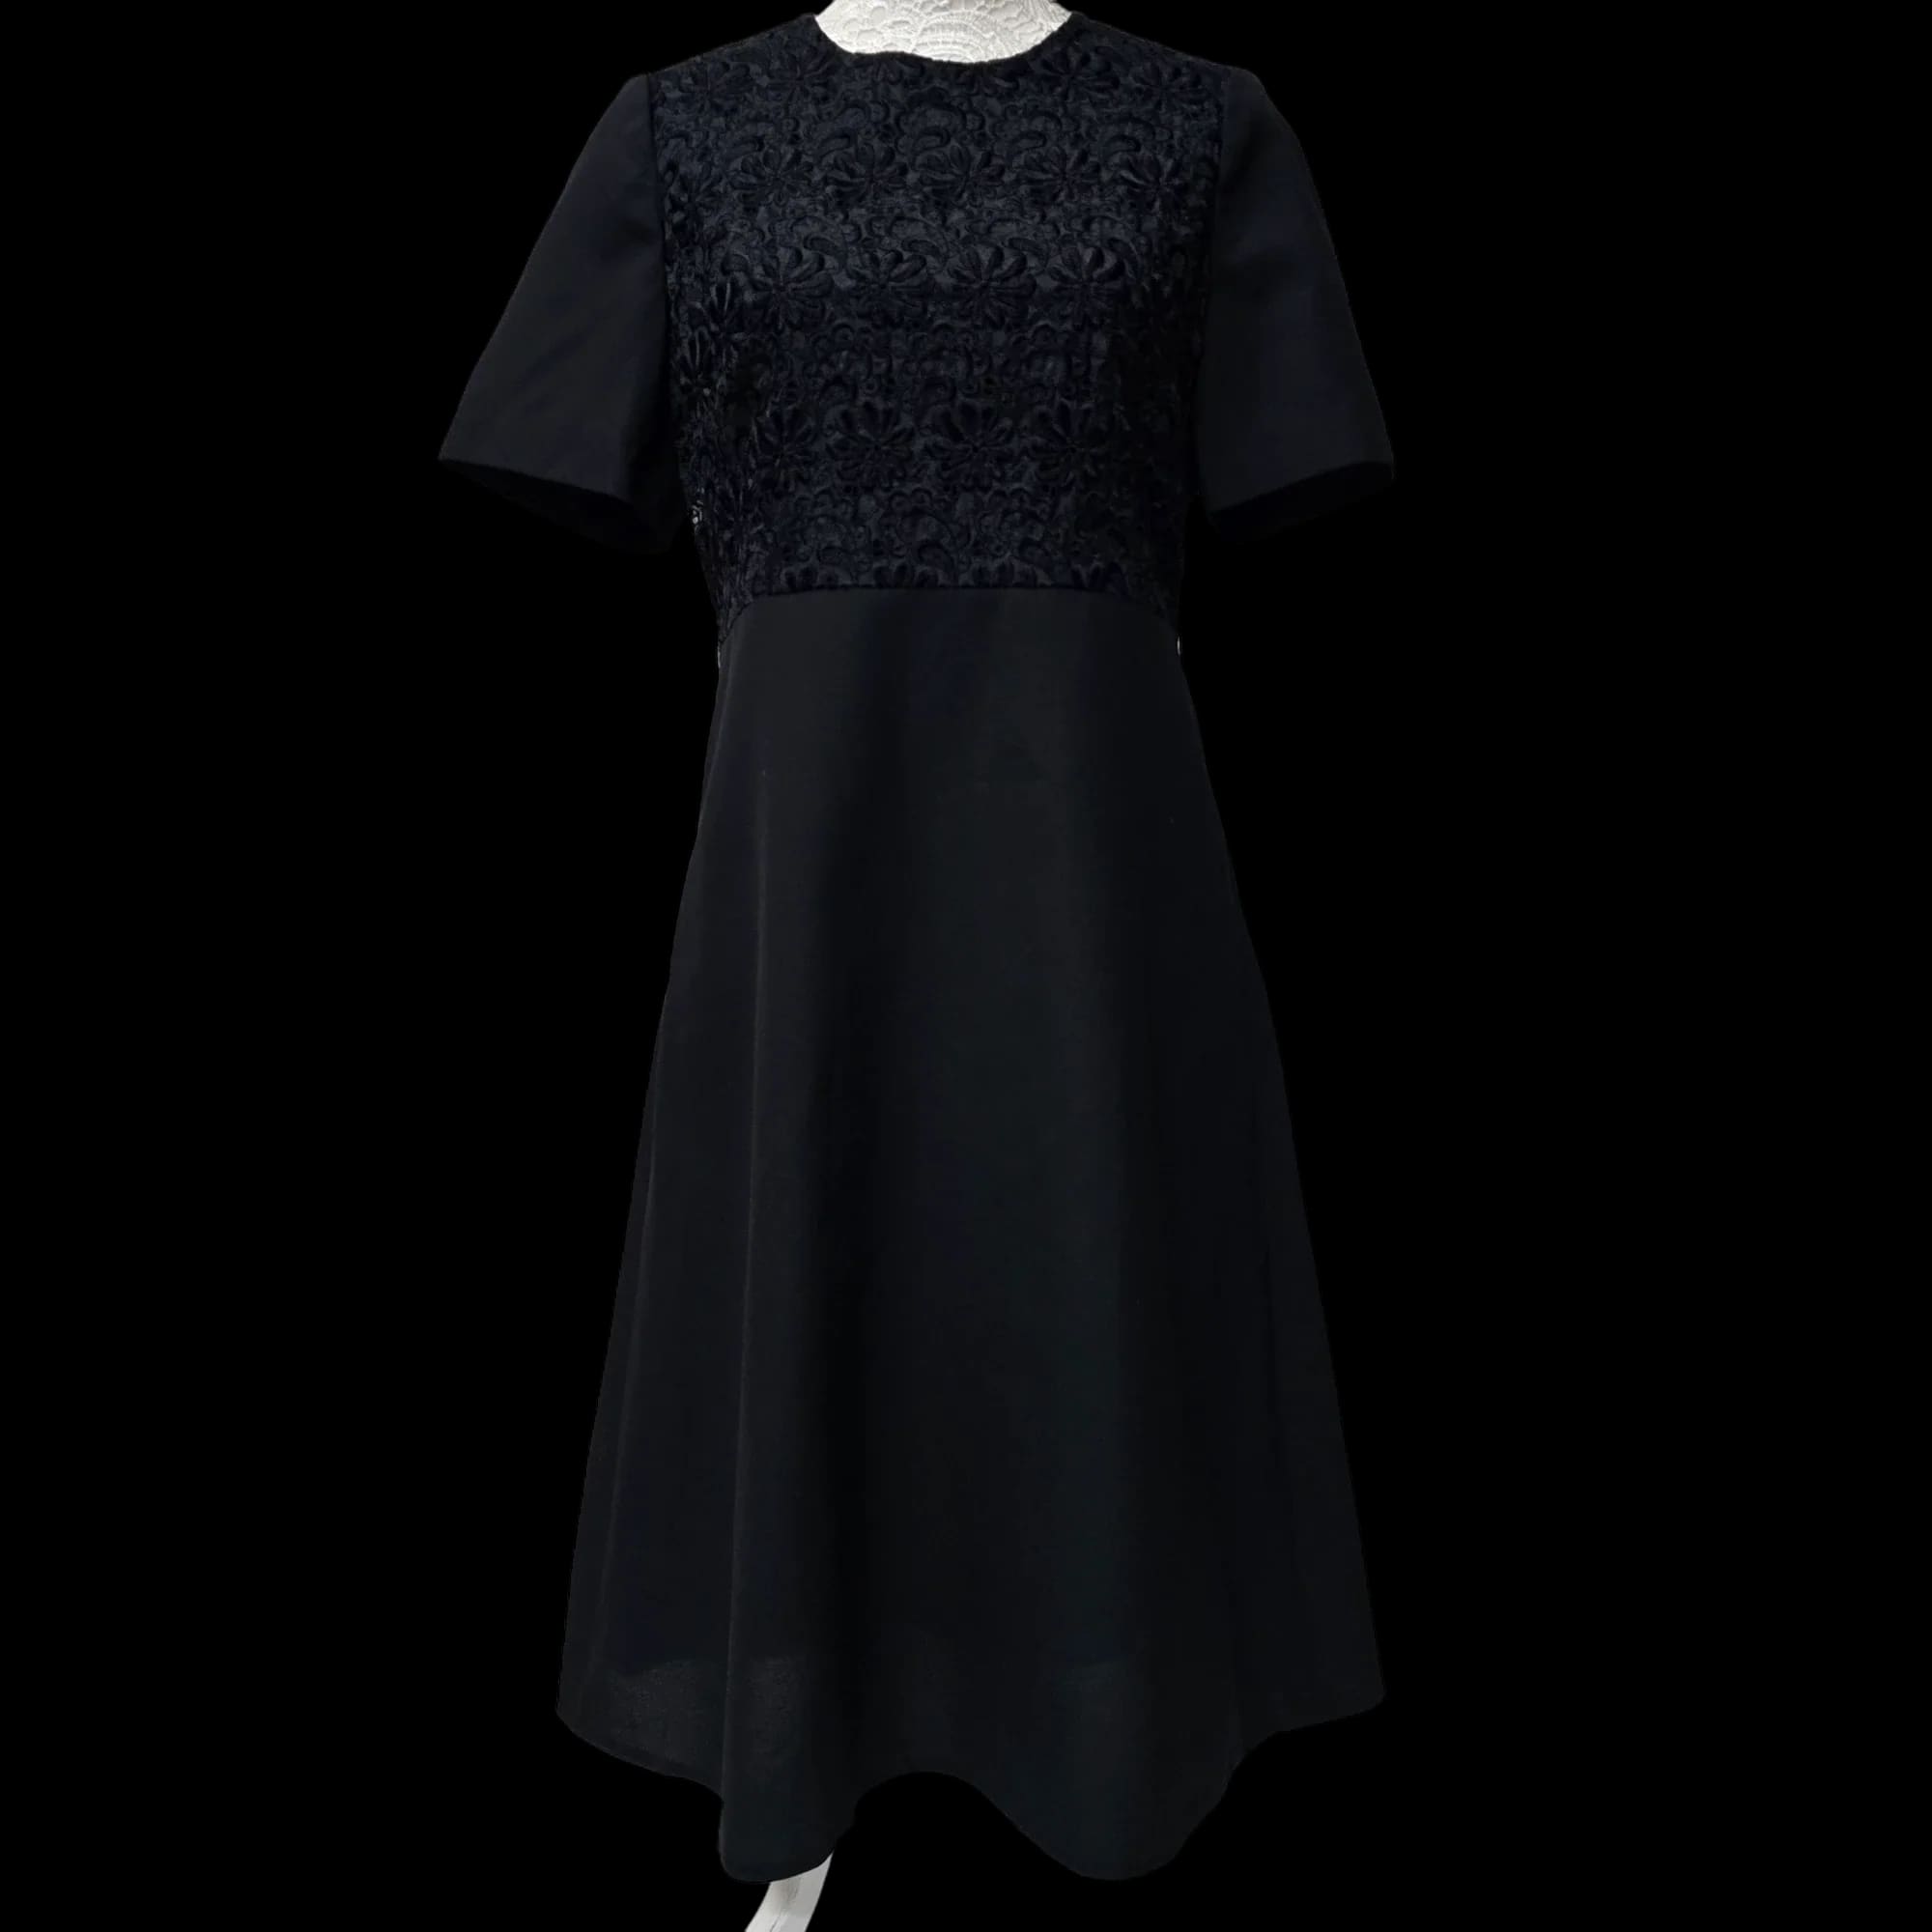 Womens Tennessee Black Floral A-Line dress UK 12-14 Vintage